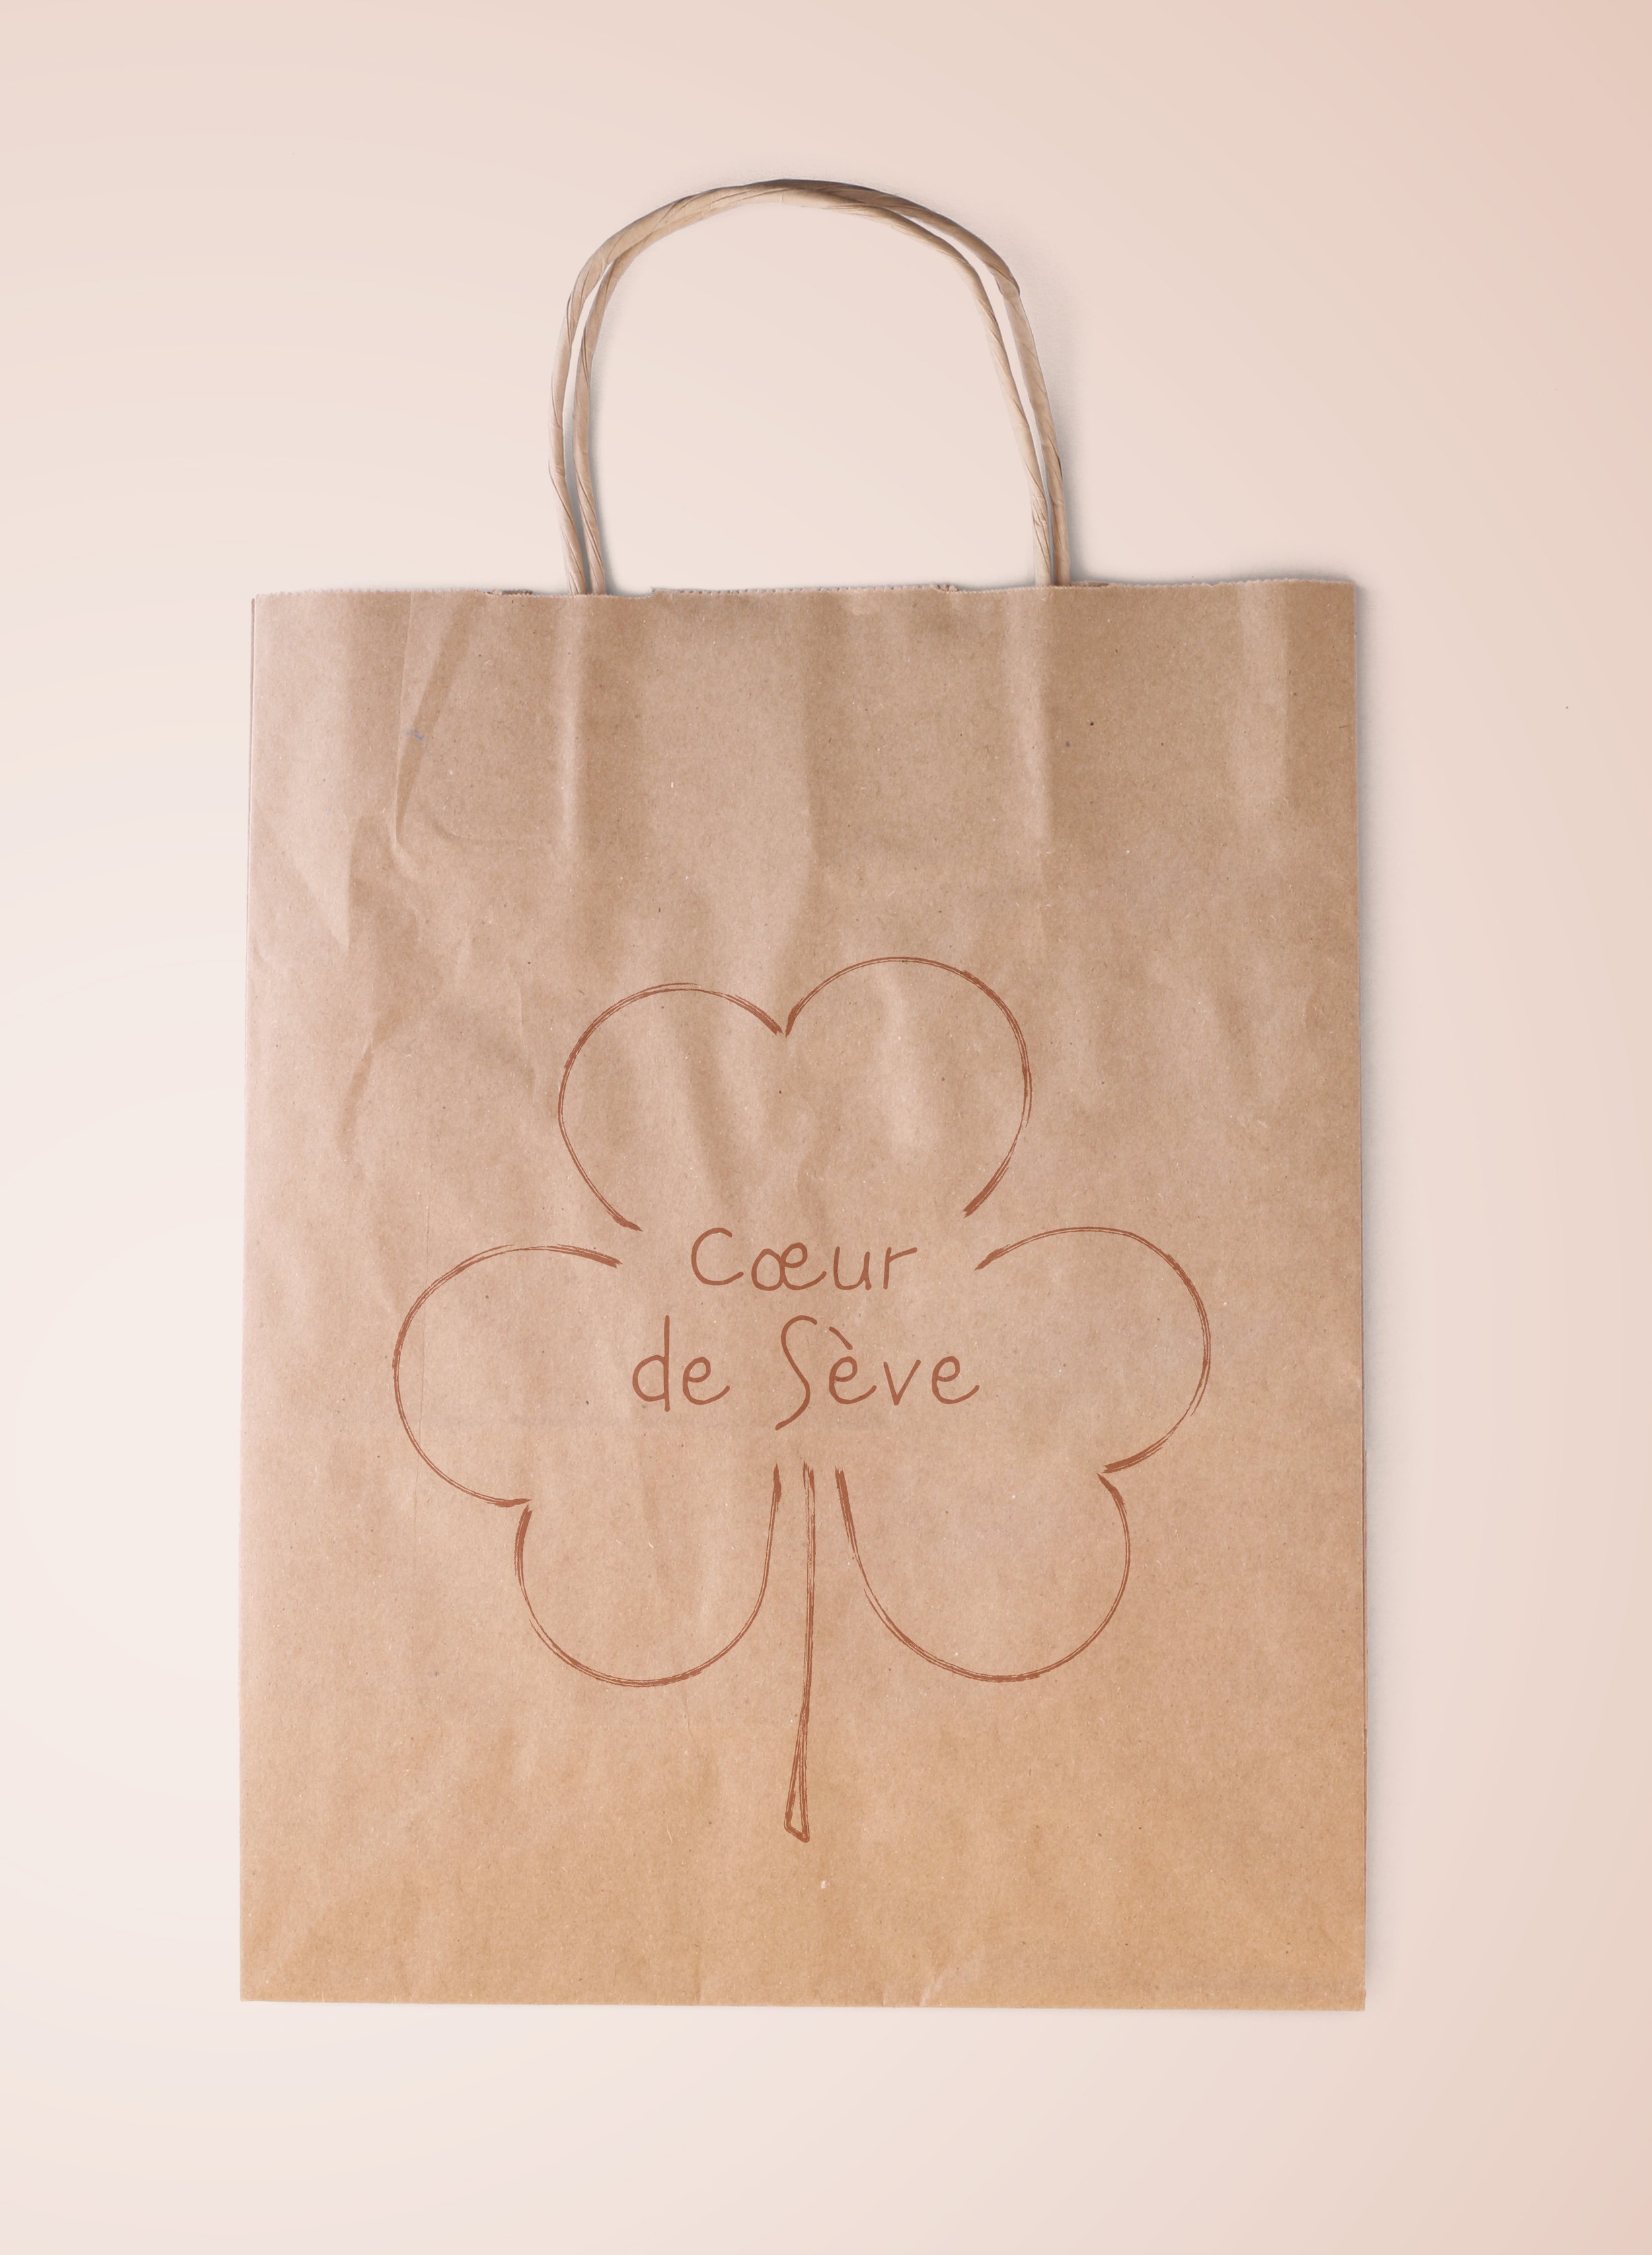 Coeur de Seve_logo_paper bag_mockup.jpg